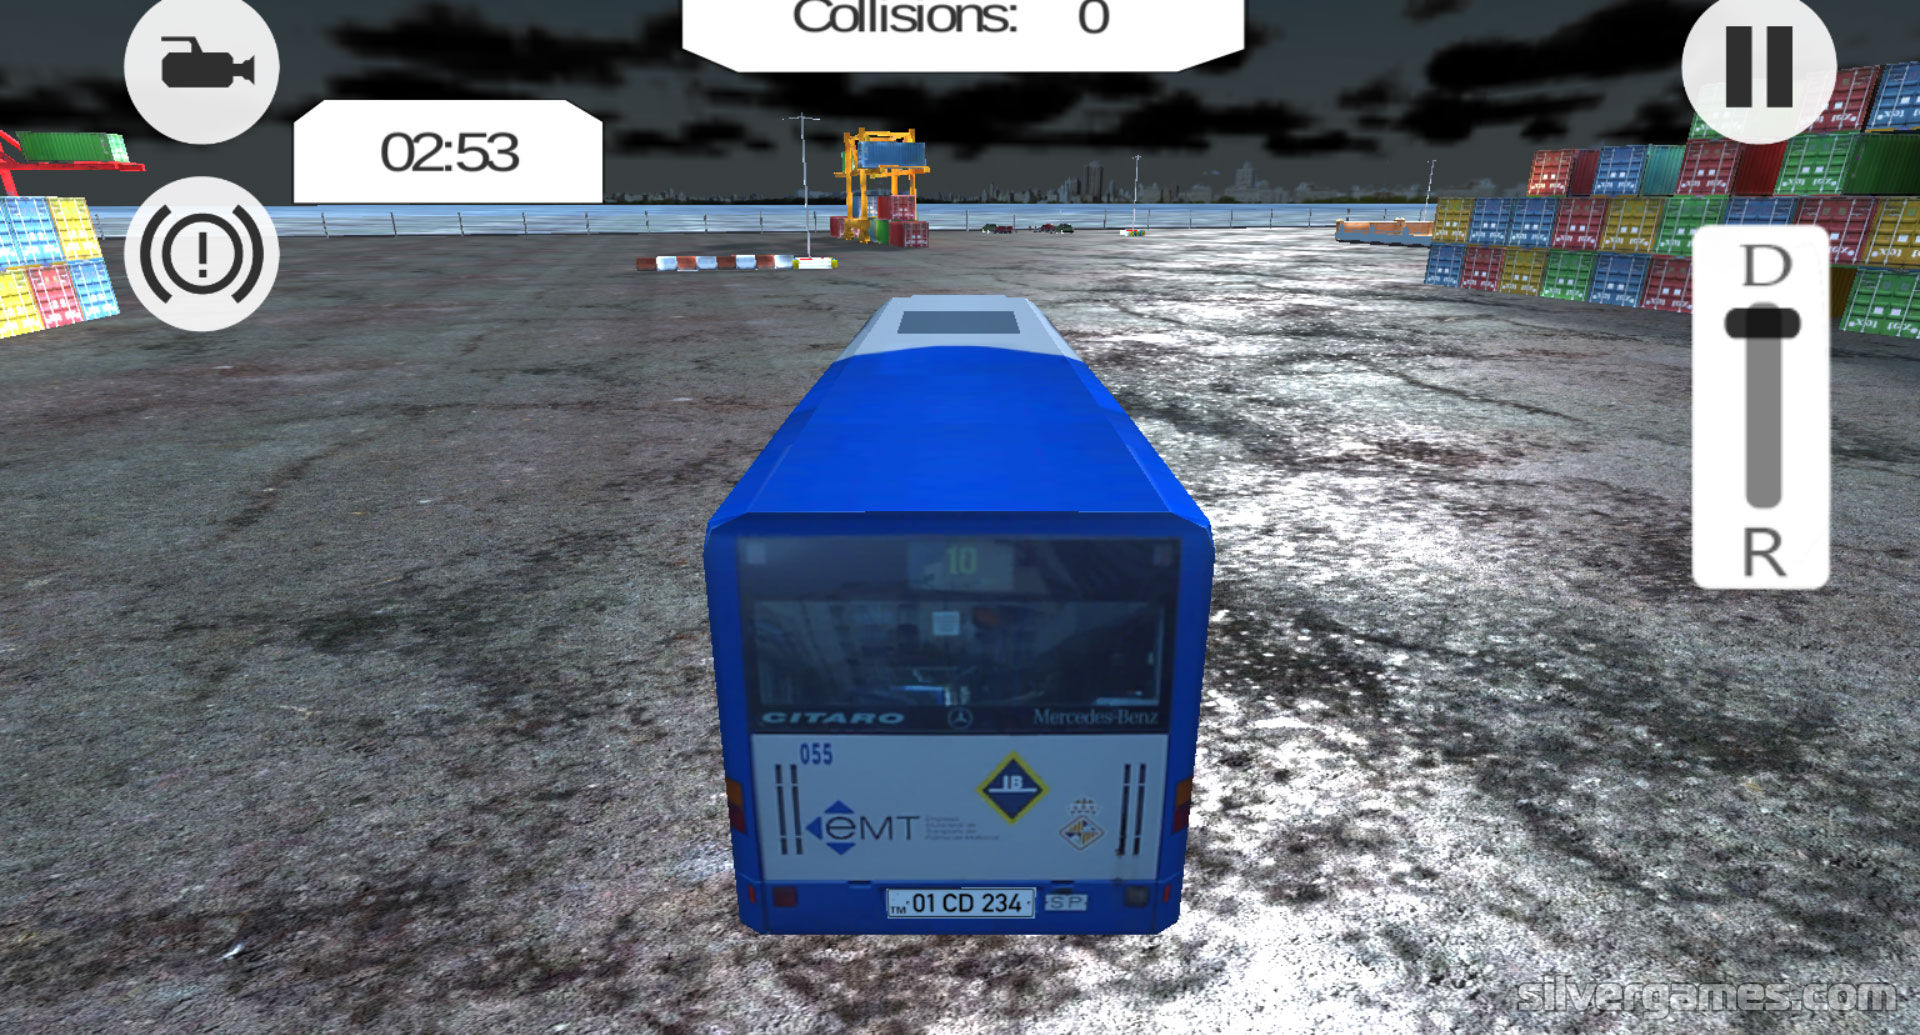 Airplane Parking Mania 3D - Jogue Online em SilverGames 🕹